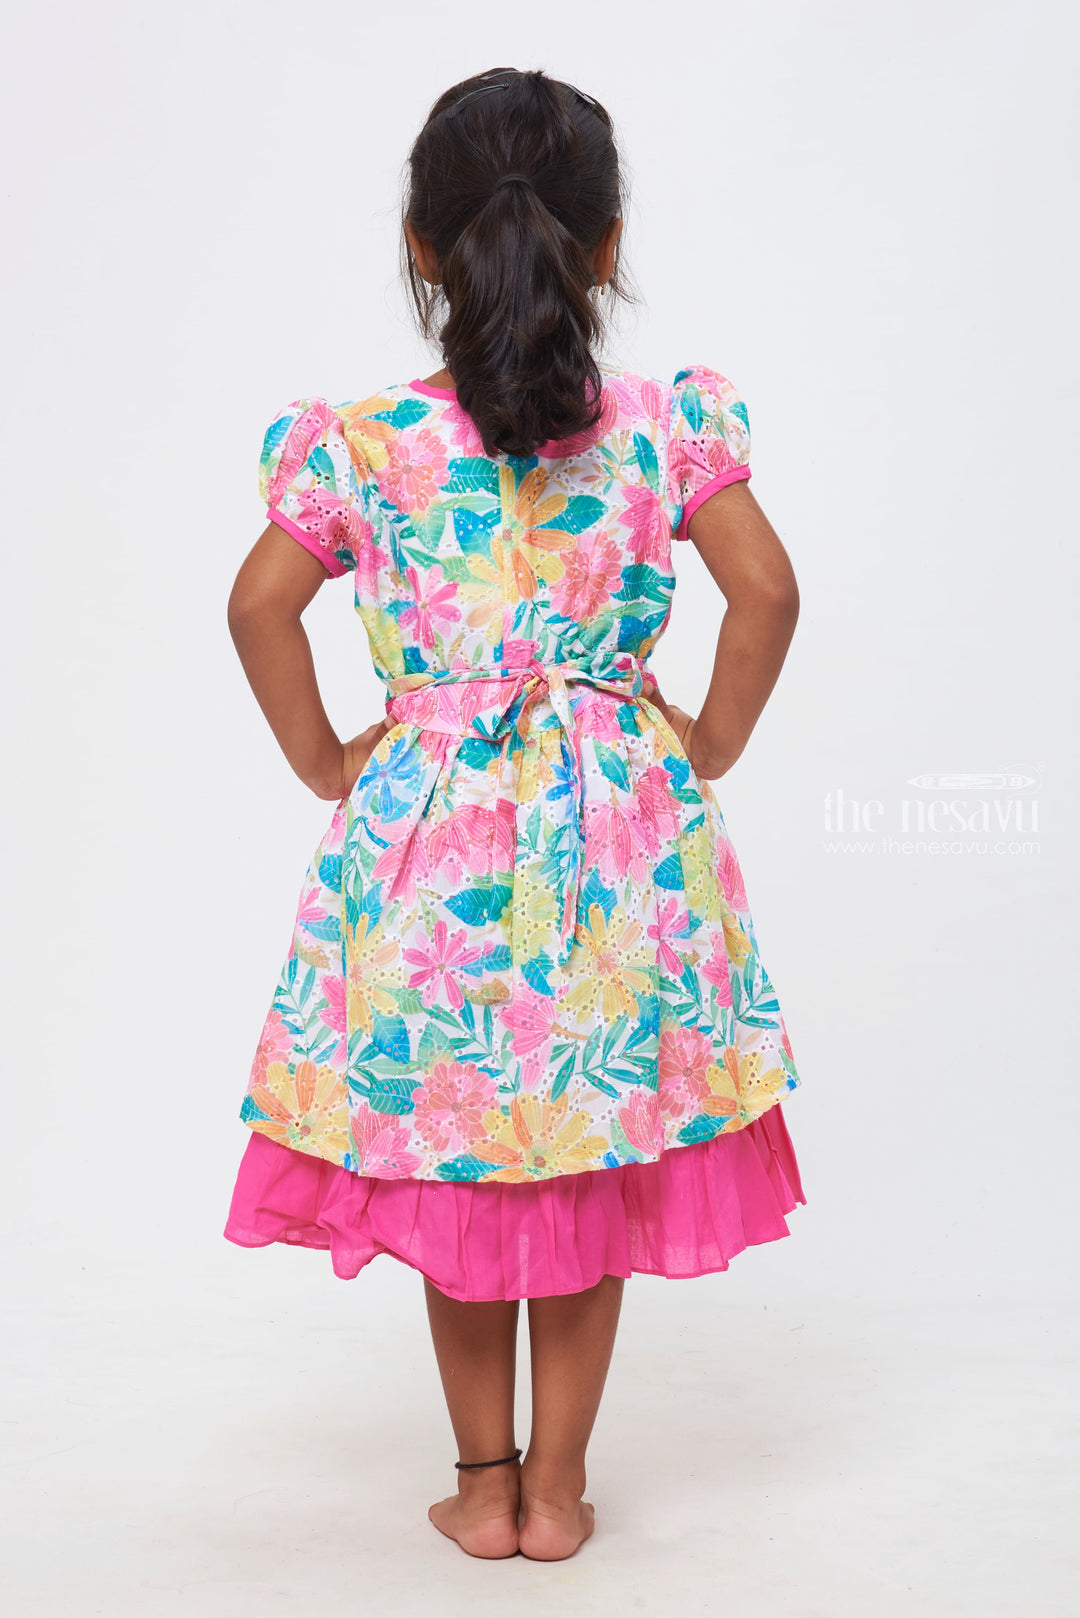 The Nesavu Girls Cotton Frock Blossom Radiance Dress - Floral Vibrancy with Magenta Accents Nesavu Cotton Comfort, Playful Patterns | Perfect Frocks for Girls | The Nesavu